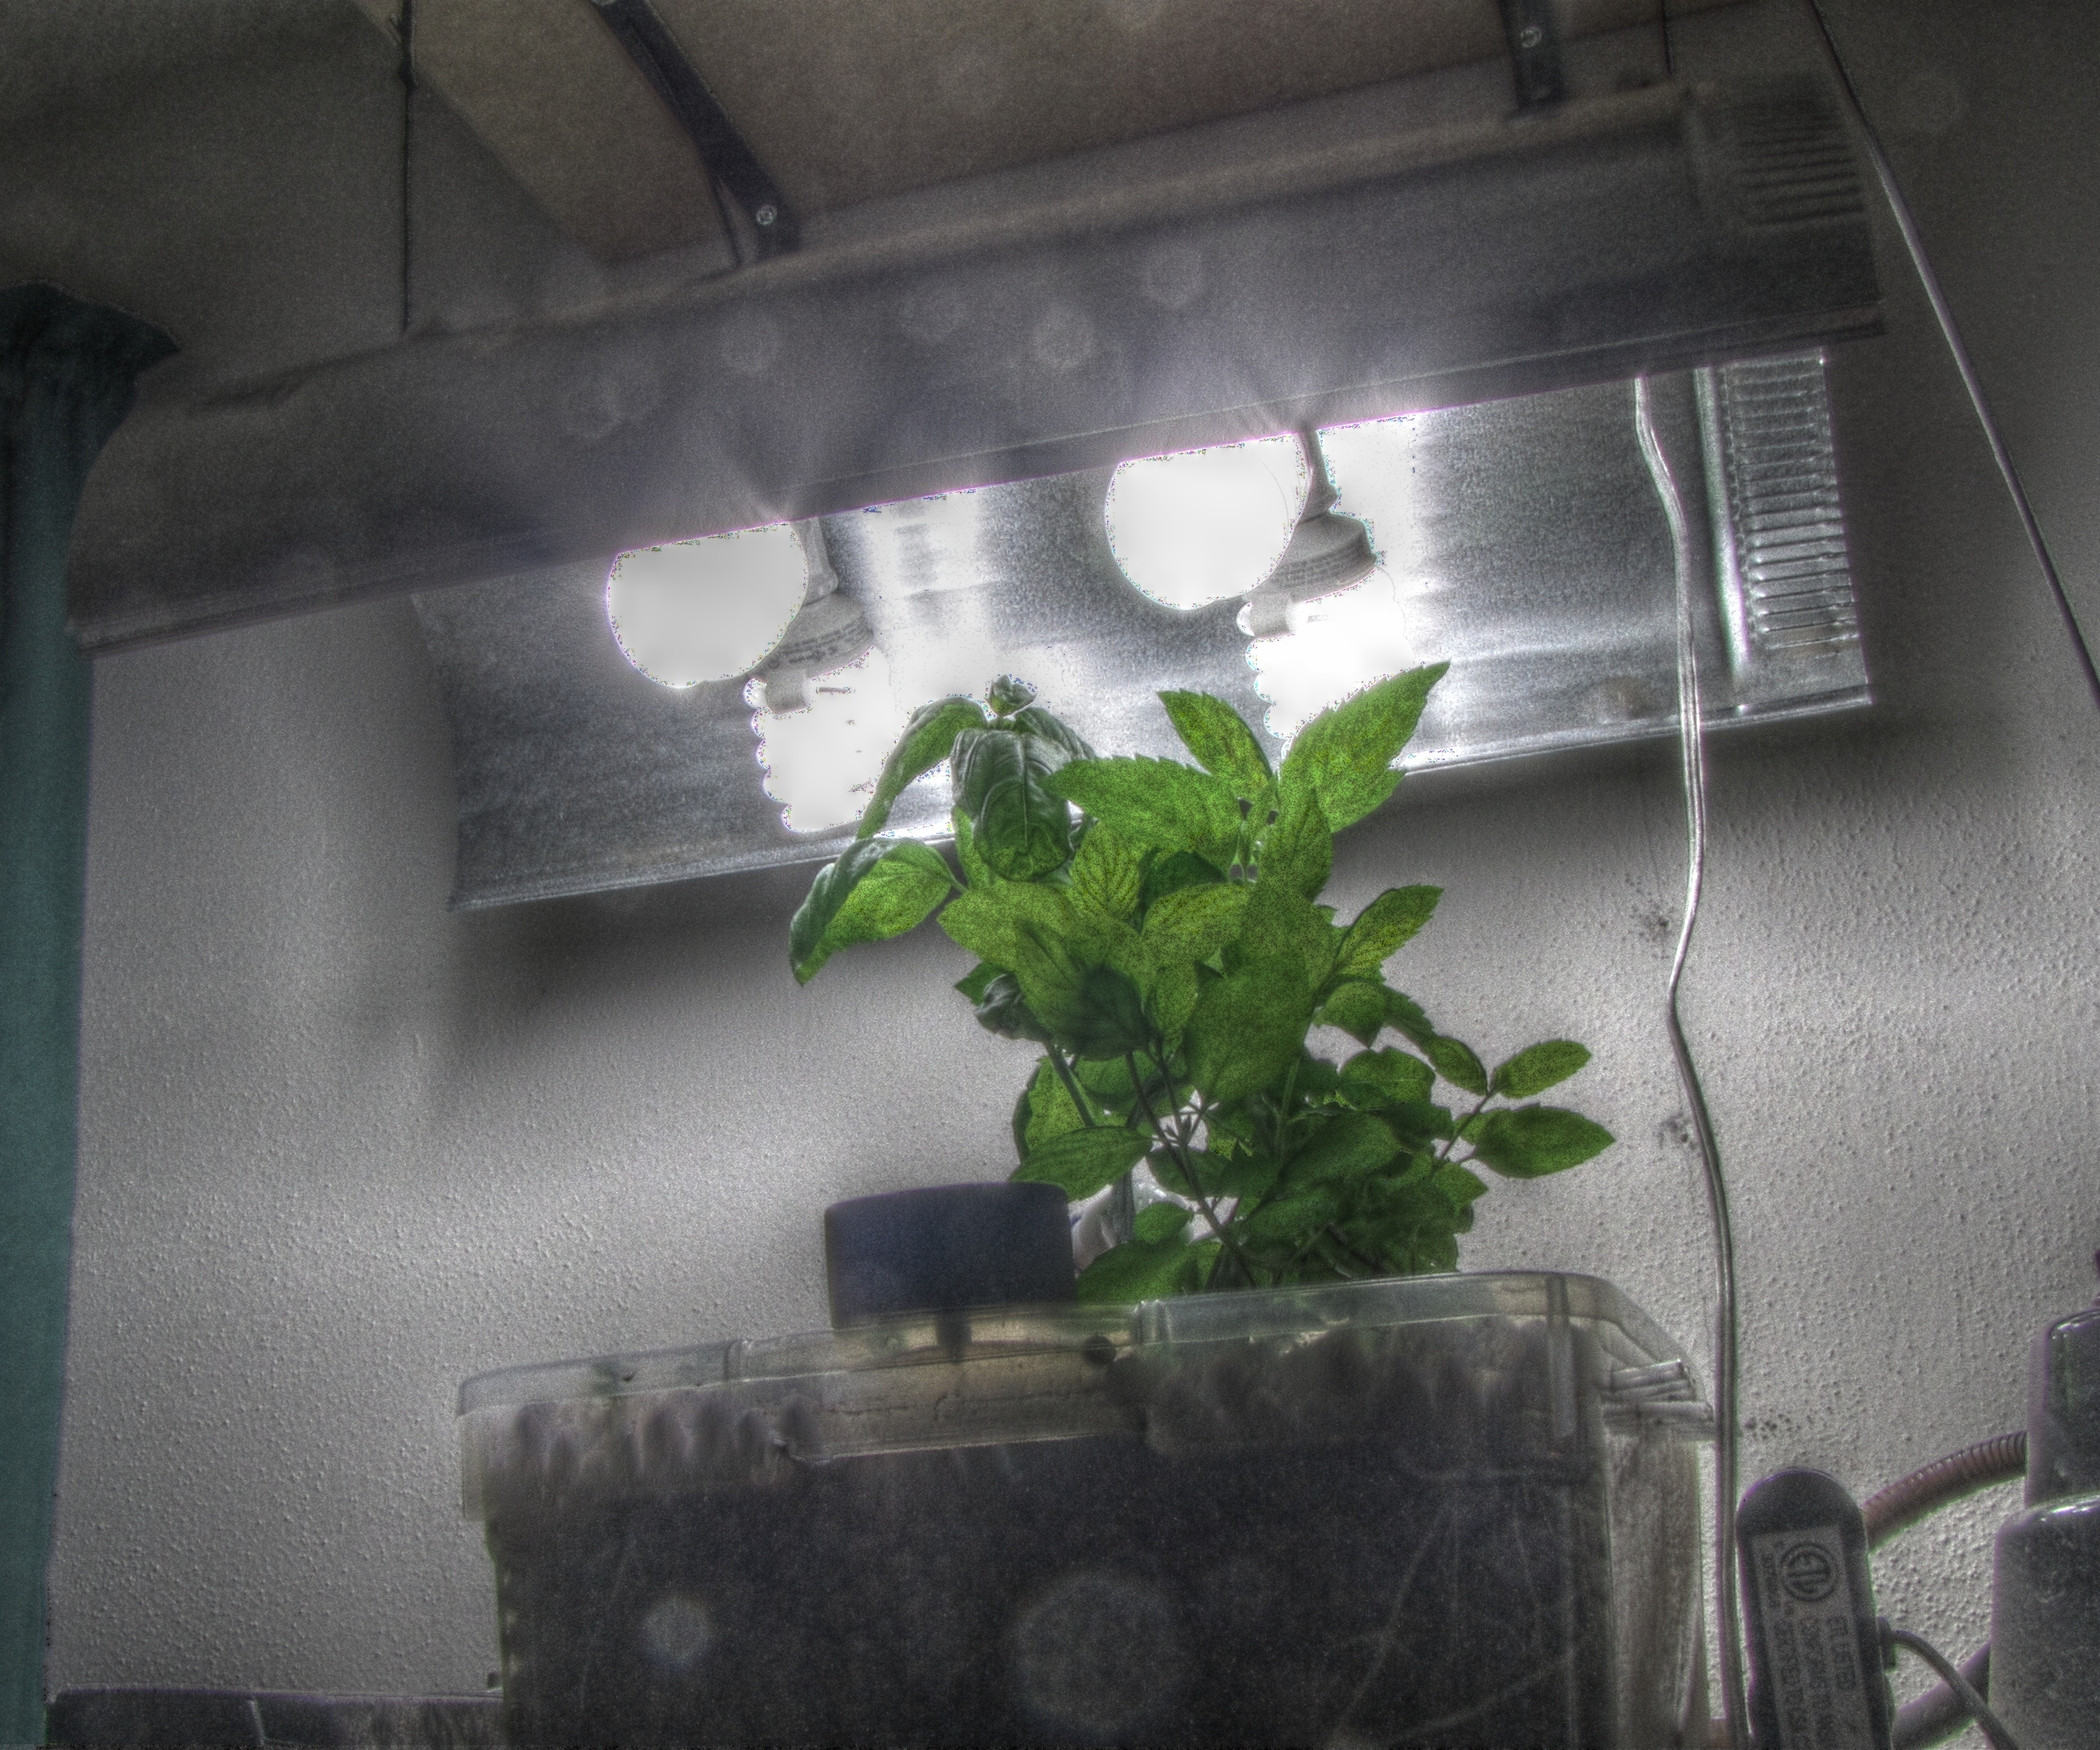 Best ideas about DIY Cfl Grow Lights
. Save or Pin Cheap DIY CFL Grow Light Now.